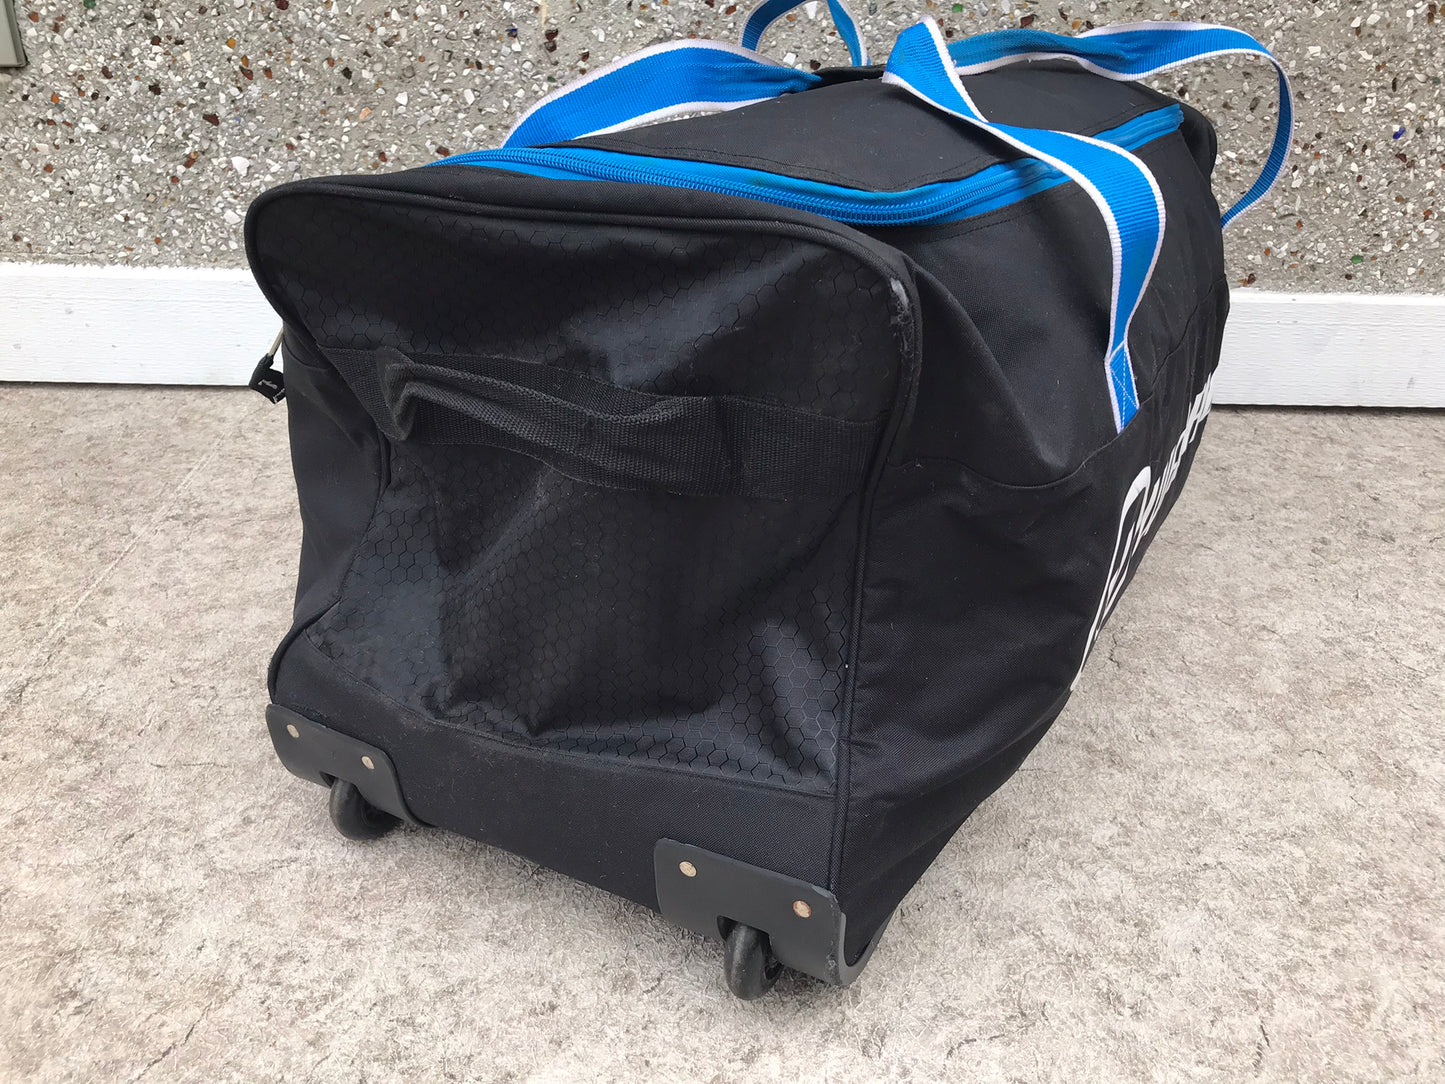 Hockey Lacrosse Sports Gear Bag Warrior Junior Size Excellent Condition On Wheels Black Blue